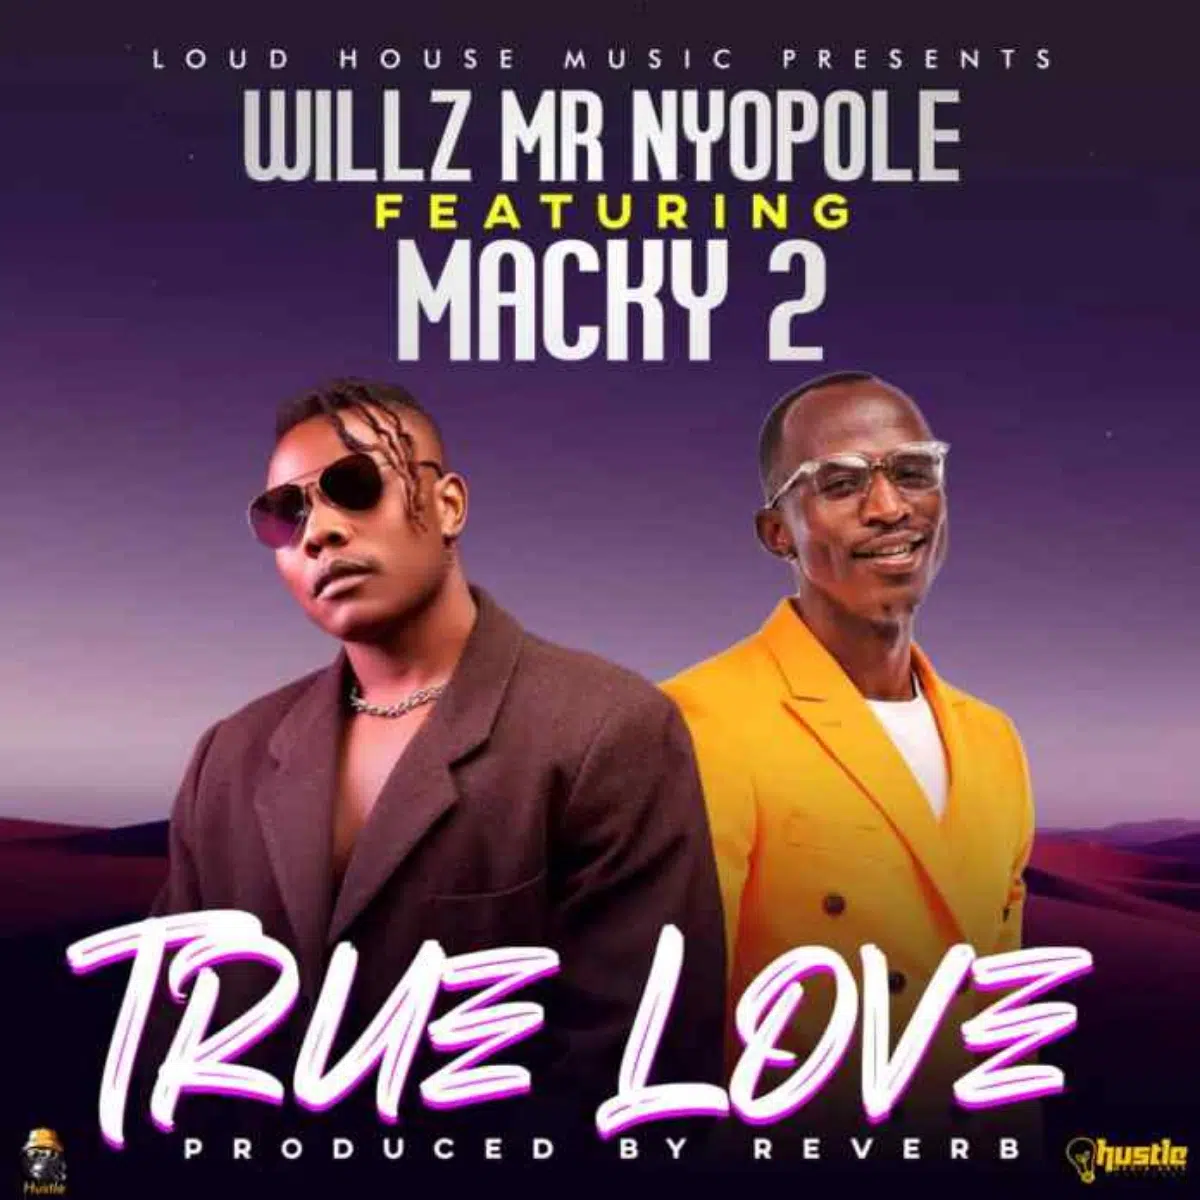 DOWNLOAD: Willz Feat Macky 2 – “True Love” Mp3